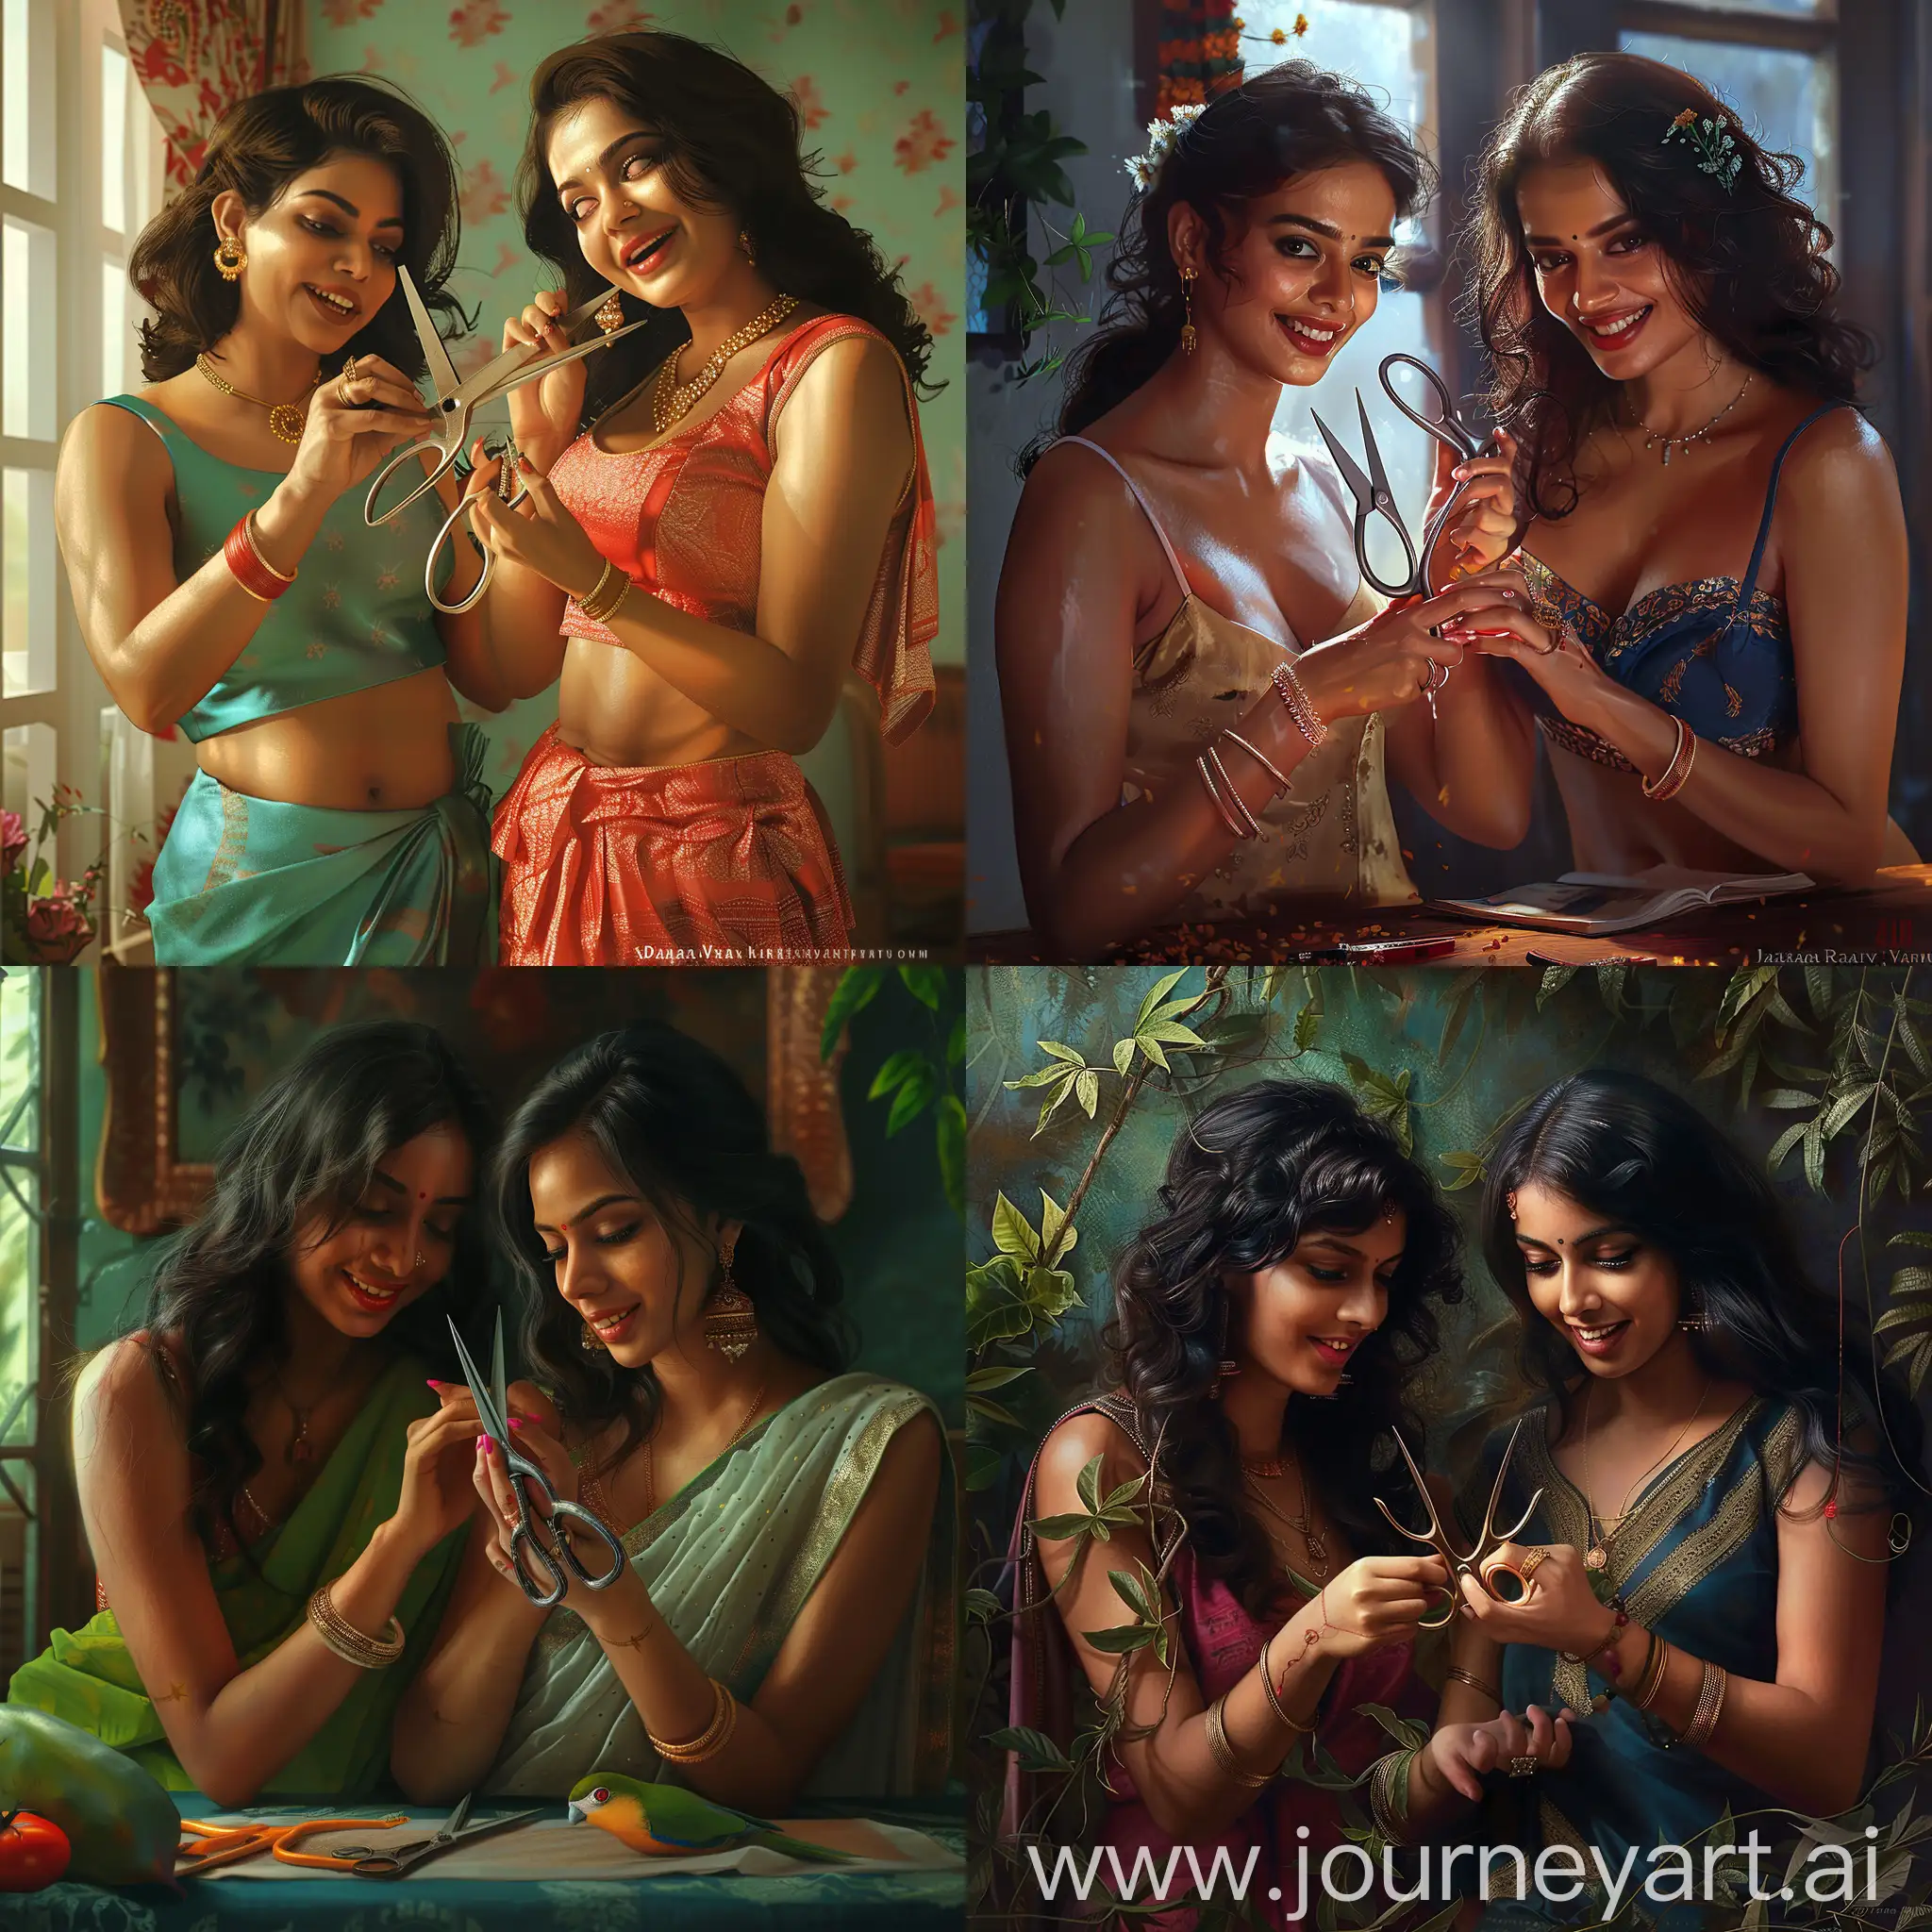 two women playing with scissors in a cute playful way, curvy, beautiful, Malayali women, by Raja Ravi Varma, hyperrealistic, photorealistic, HD 4k